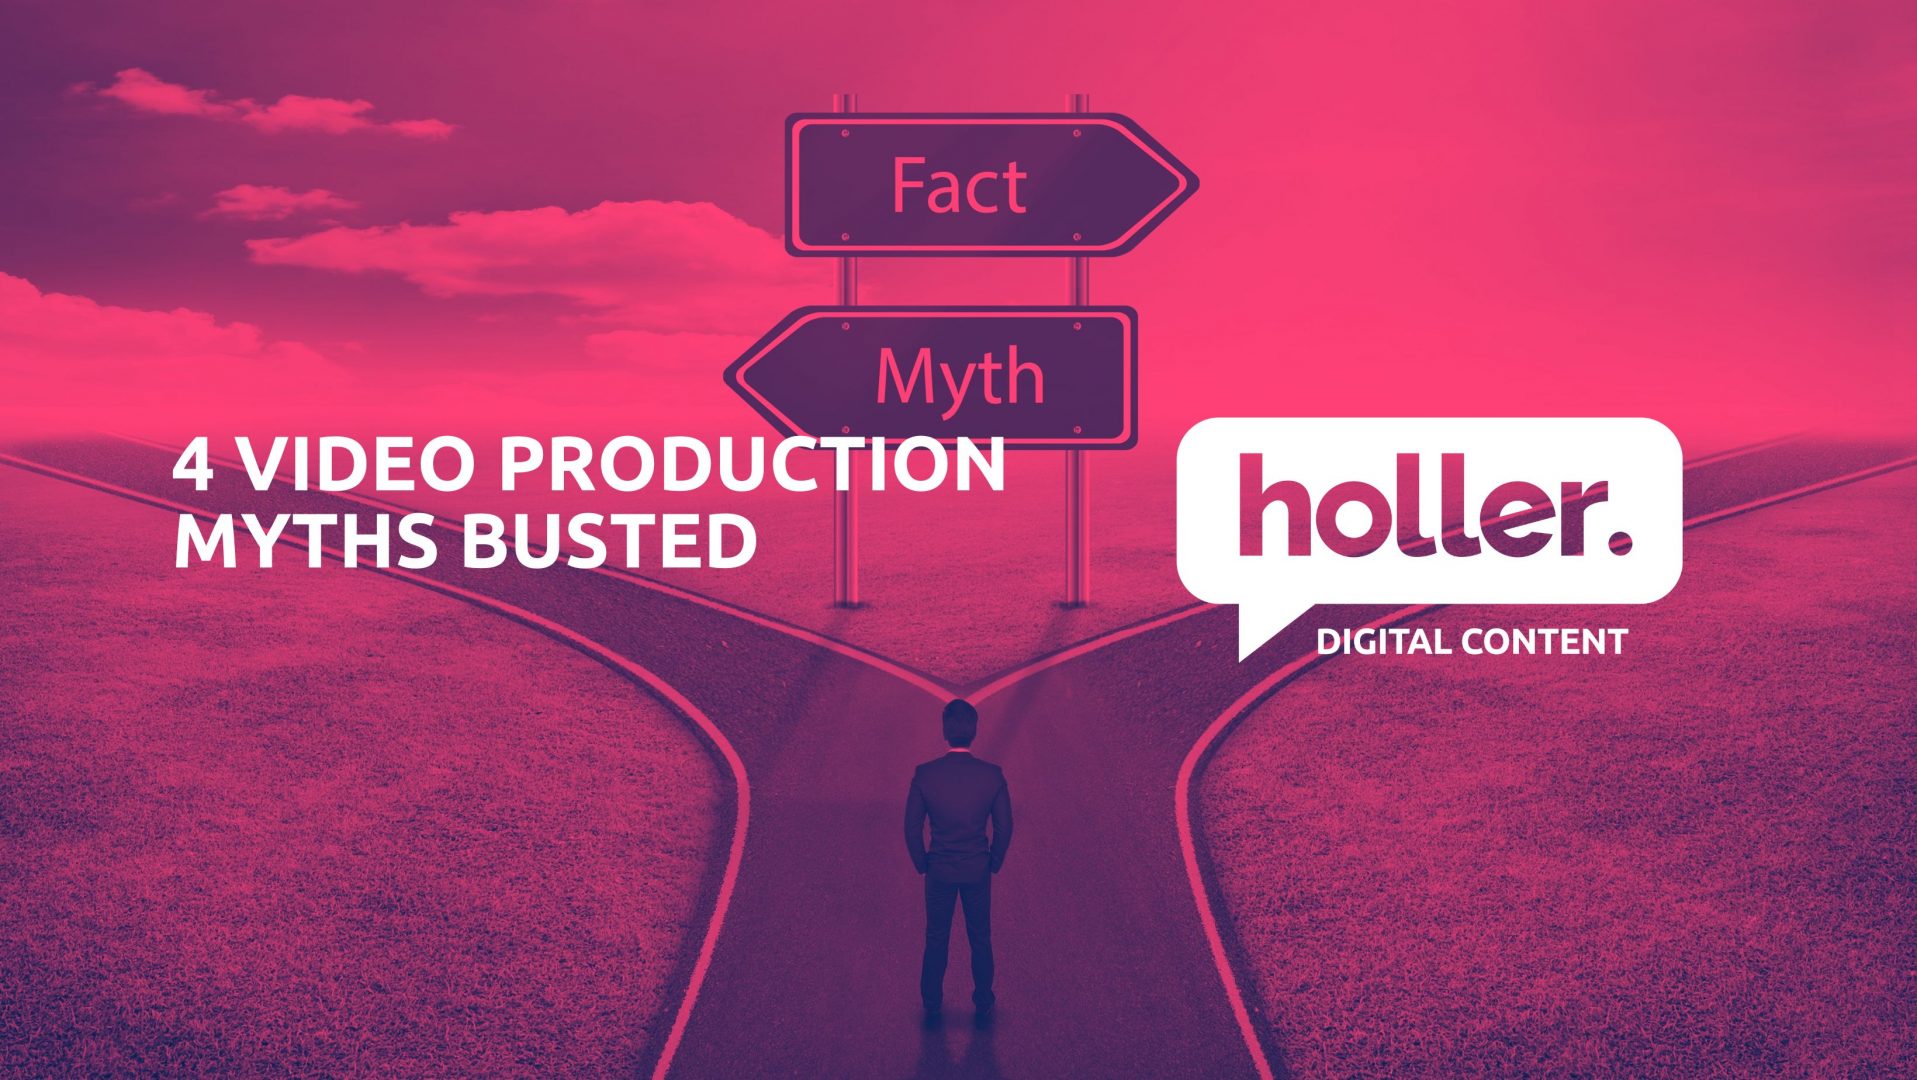 VIDEO PRODUCTION MYTHS